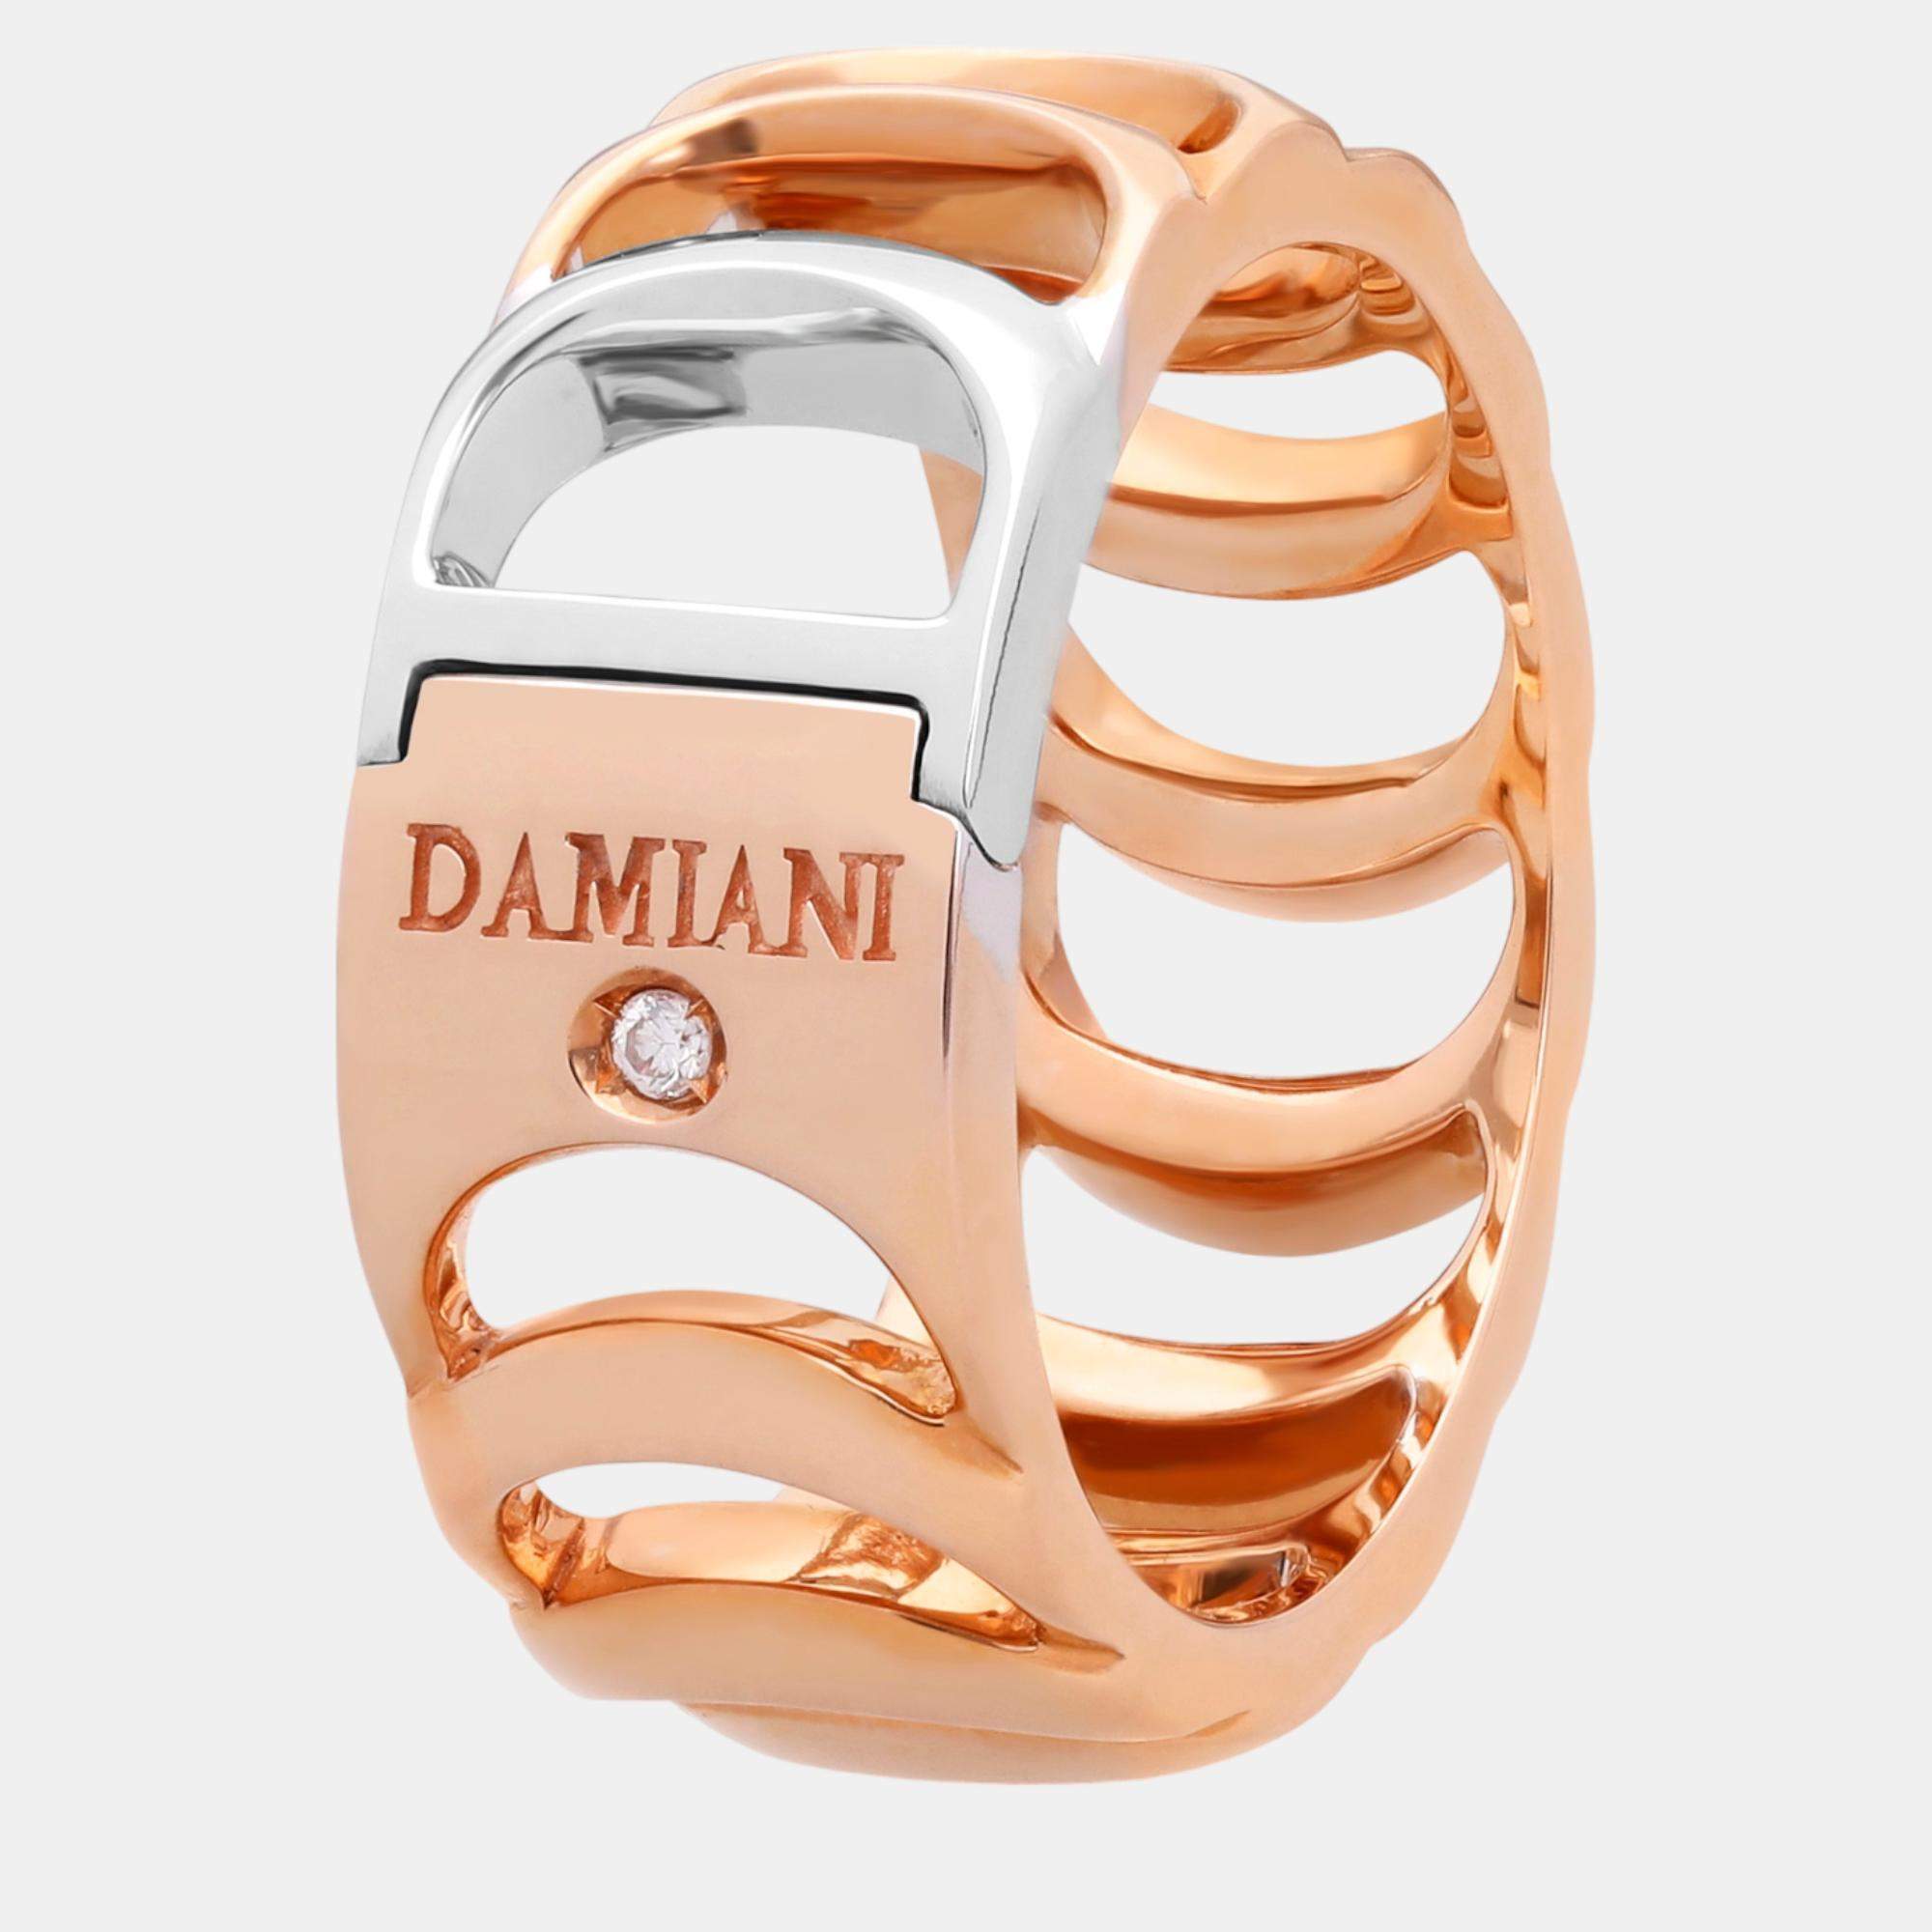 Damiani 18K Rose Gold and 18K White Gold, Diamond Band Ring